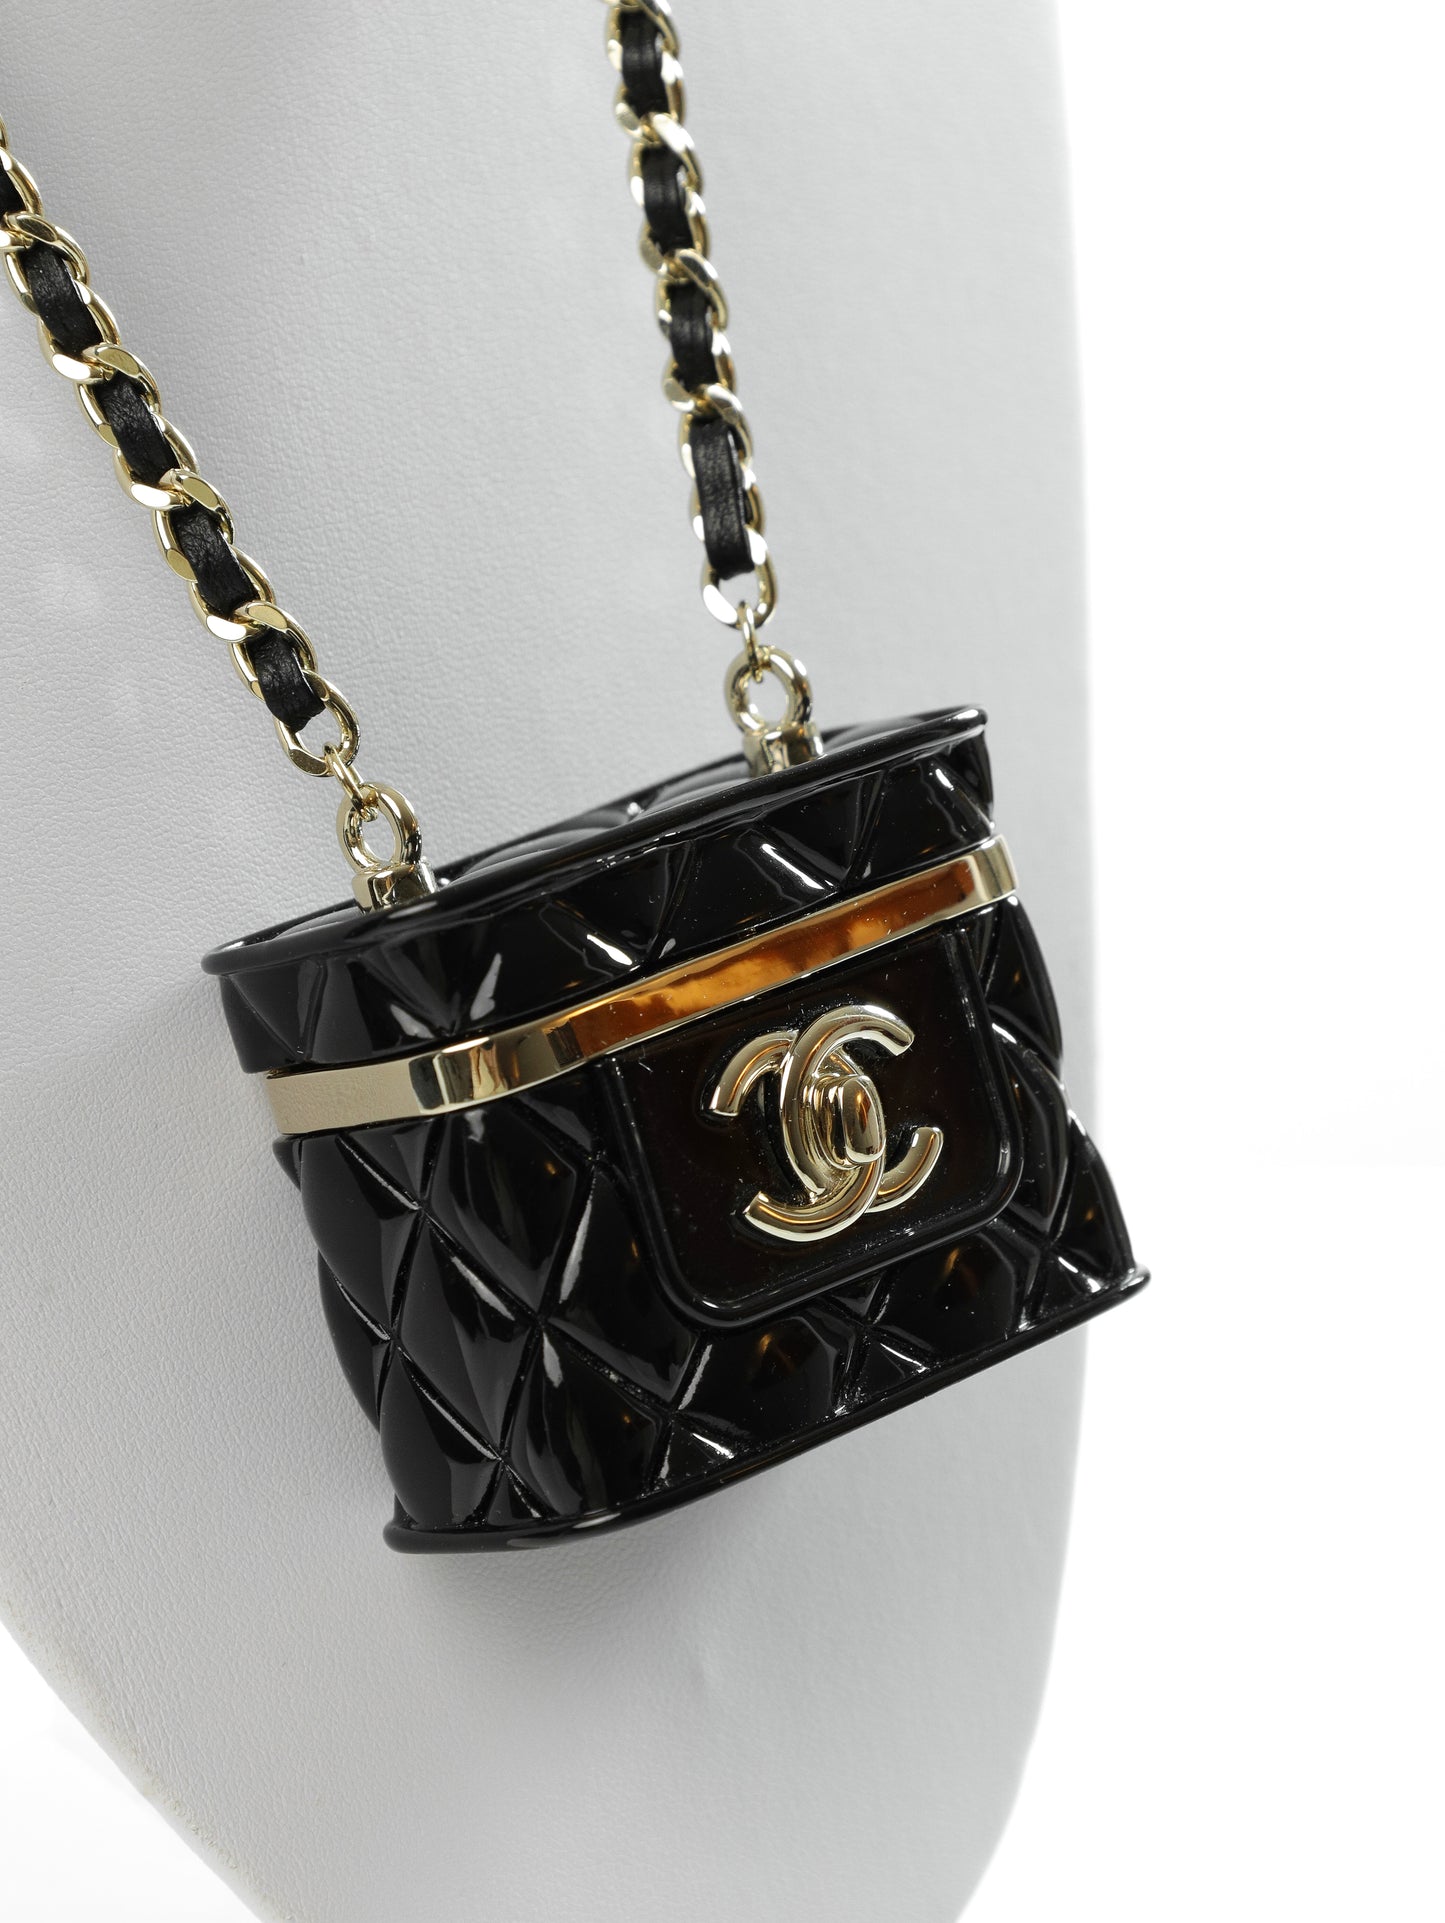 CHANEL necklace chain with handbag pendant vanity bag